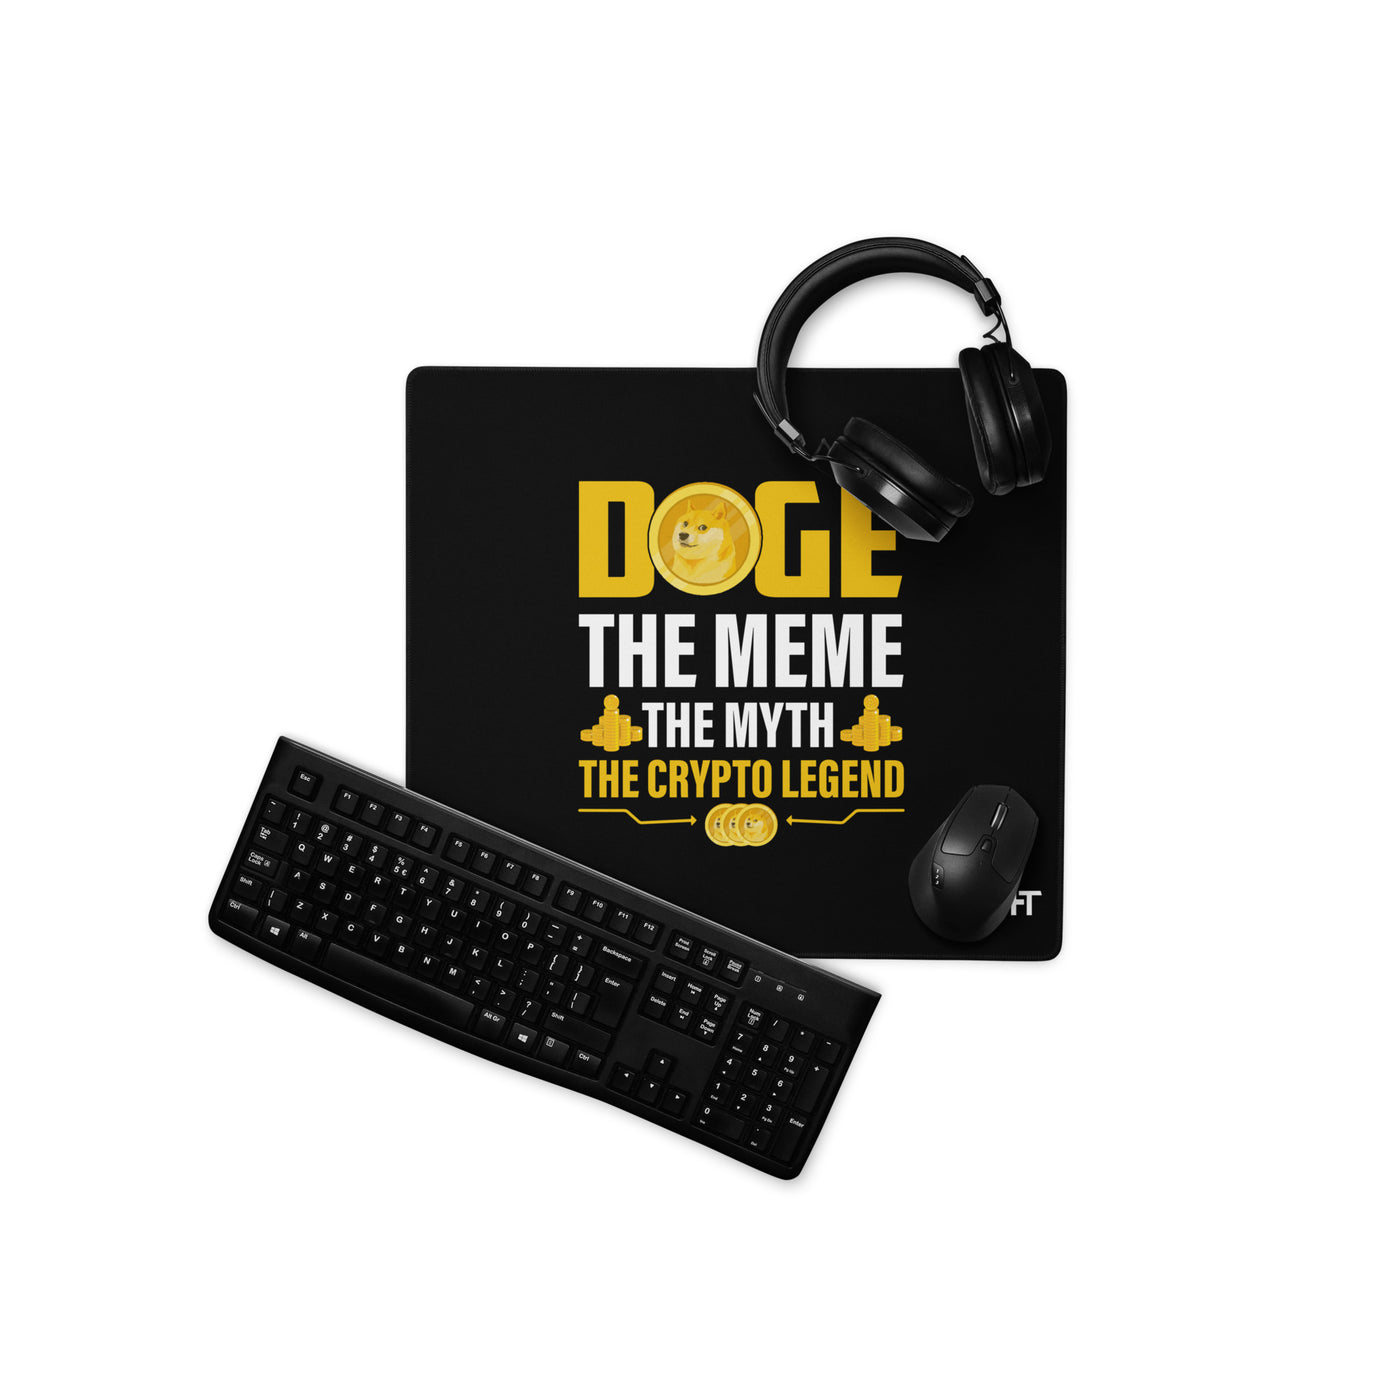 Doge the Meme, the Myth, the Crypto Legend - Desk Mat